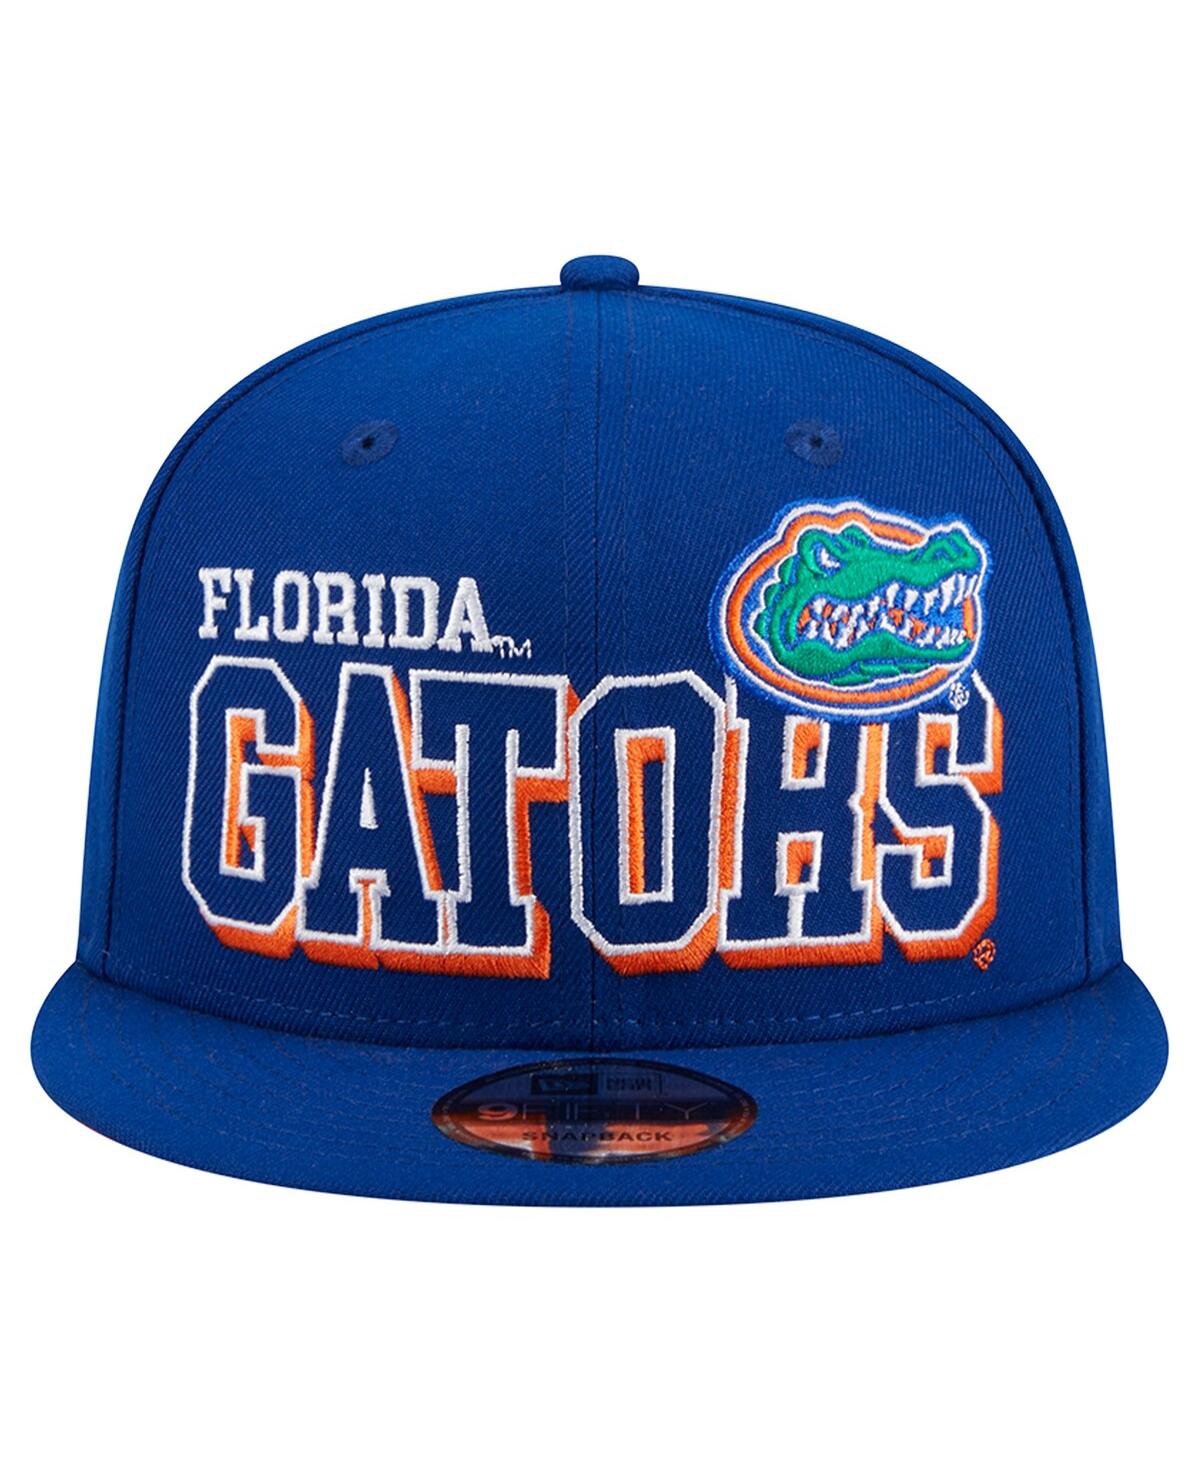 Shop New Era Men's Royal Florida Gators Game Day 9fifty Snapback Hat